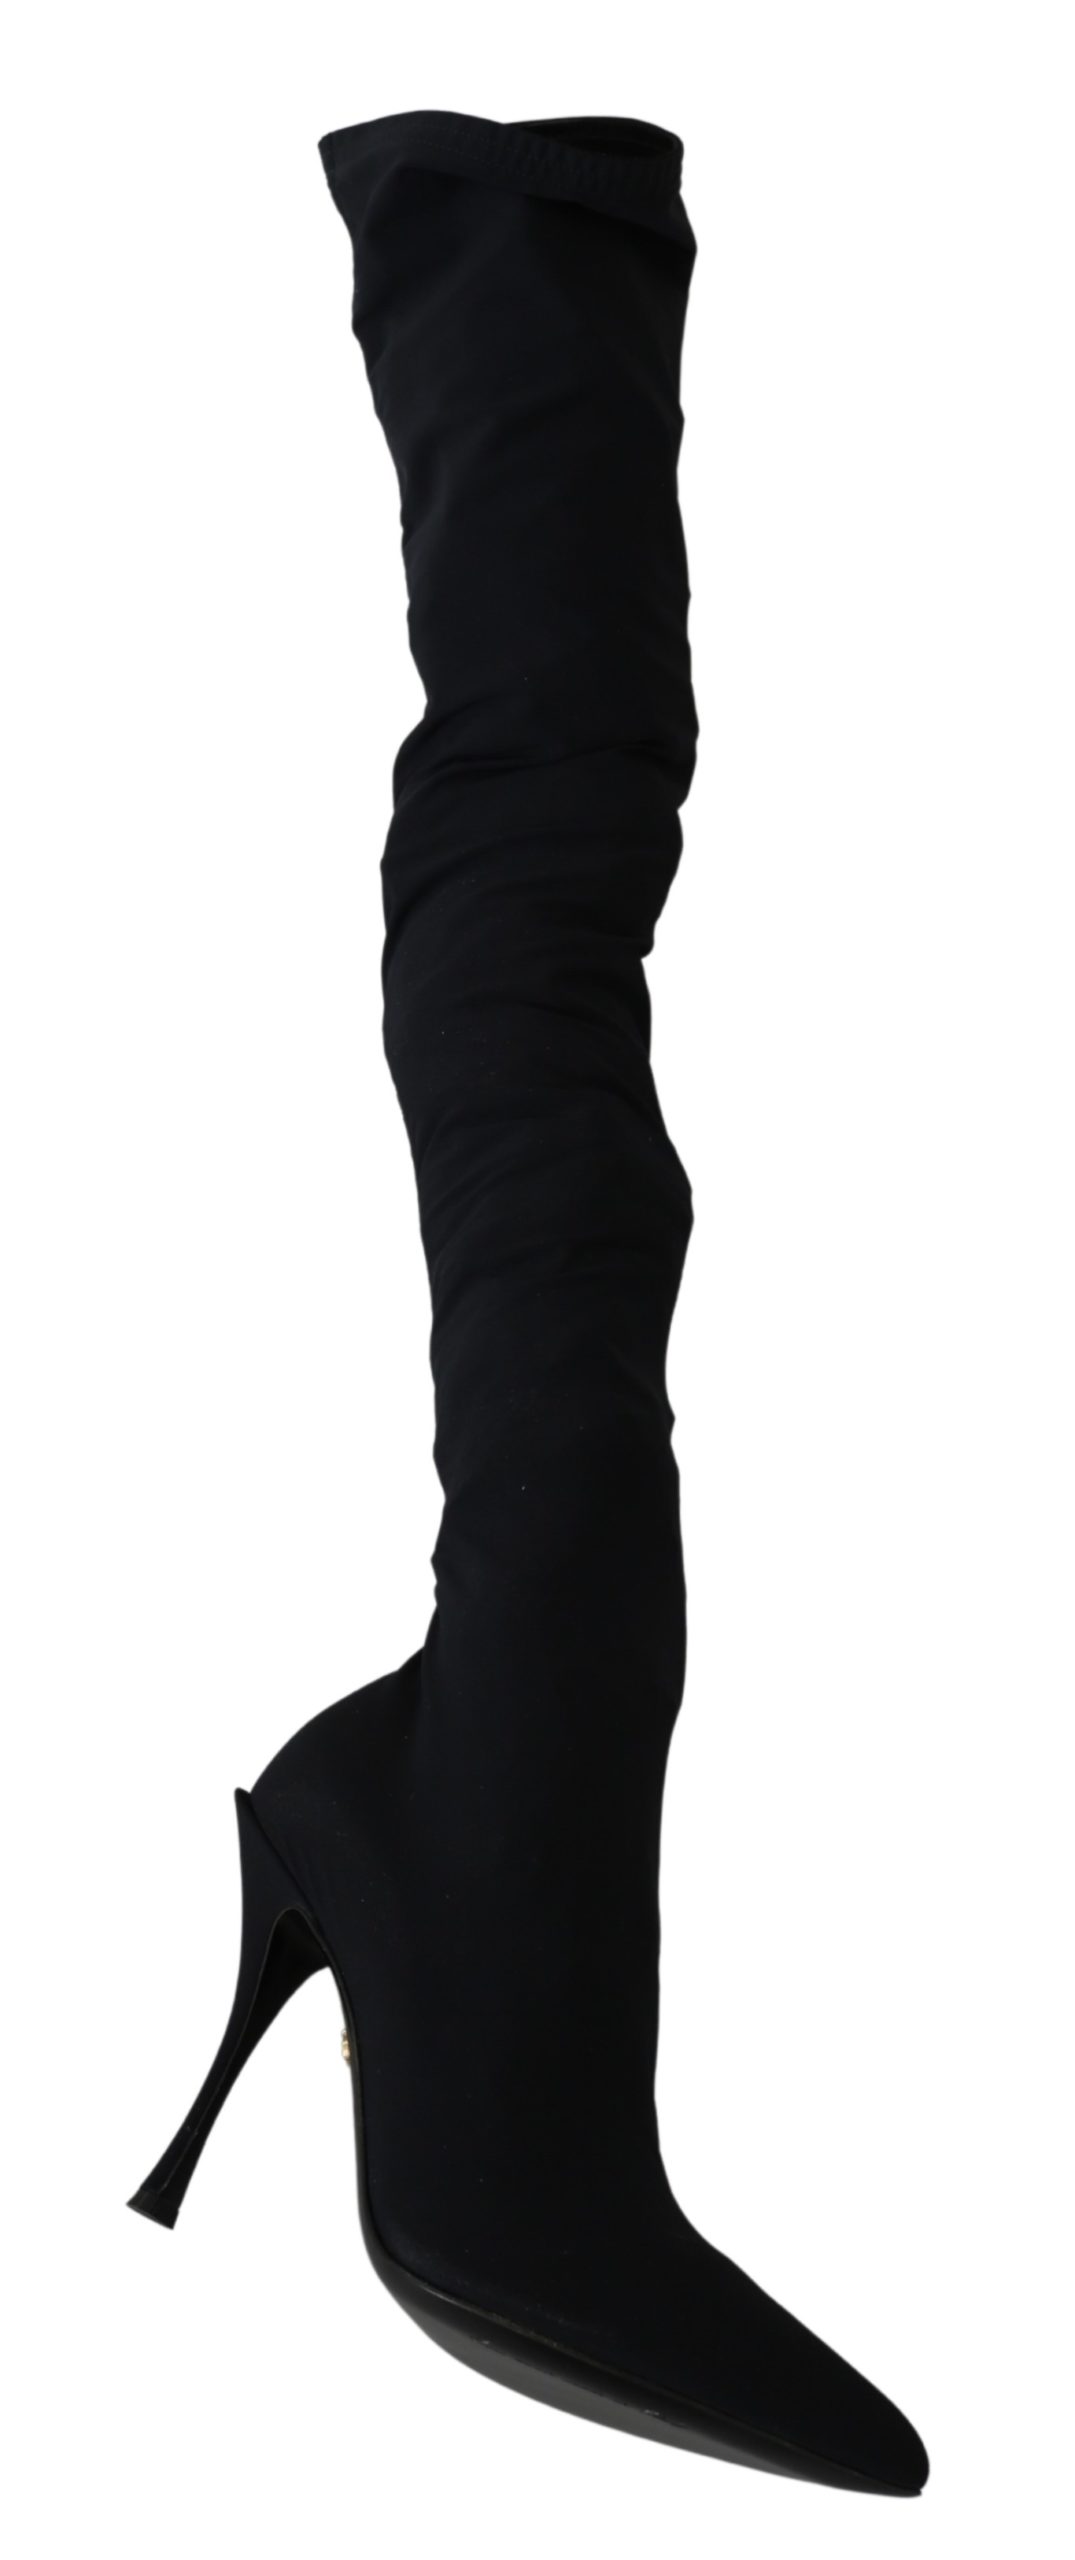 Black Jersey Stretch Knee High Boots Shoes - EU39/US8.5